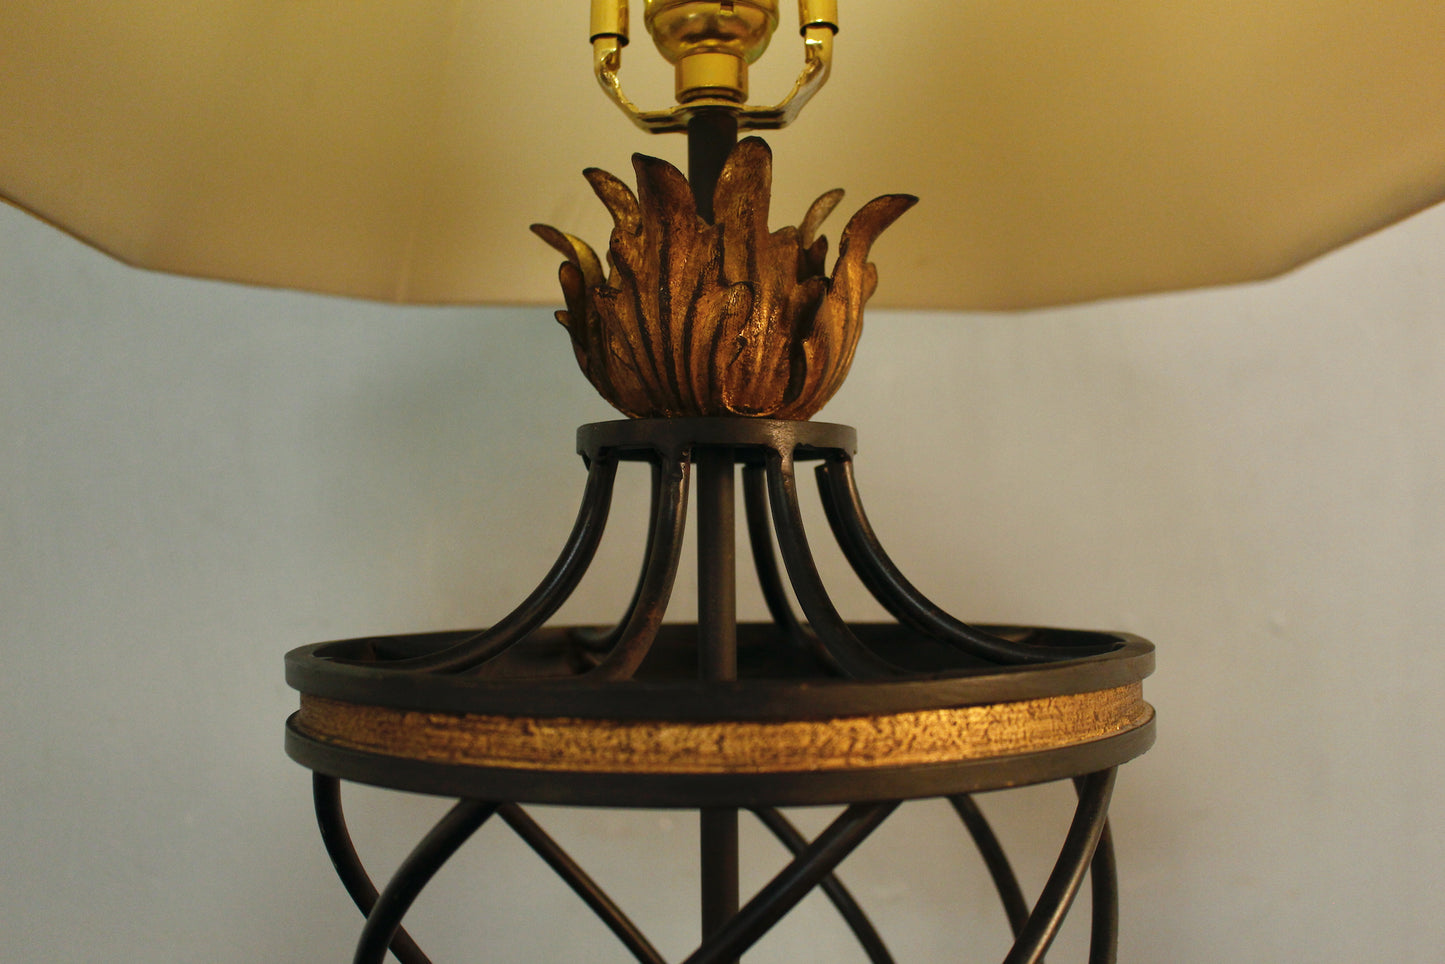 Hollywood Regency Iron Lattice Table Lamp